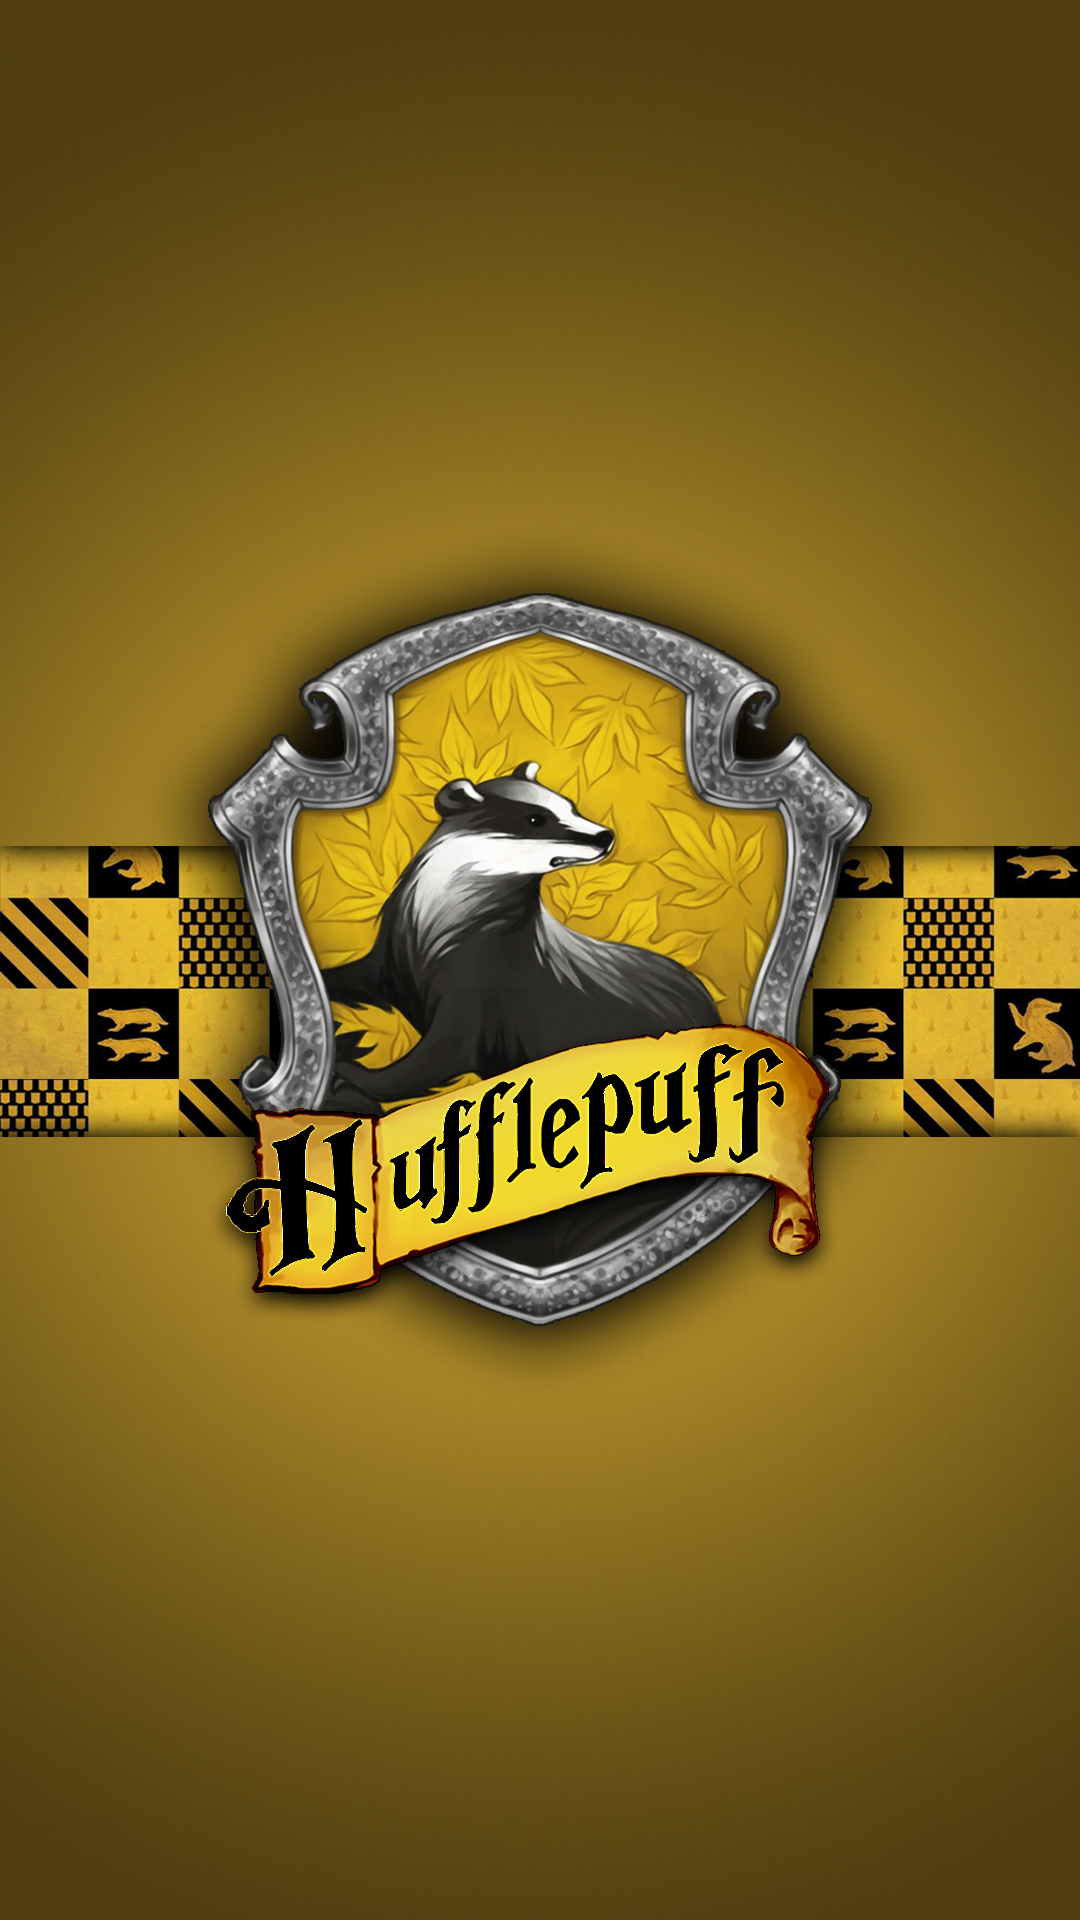 Harry Potter Hufflepuff House by Starfade